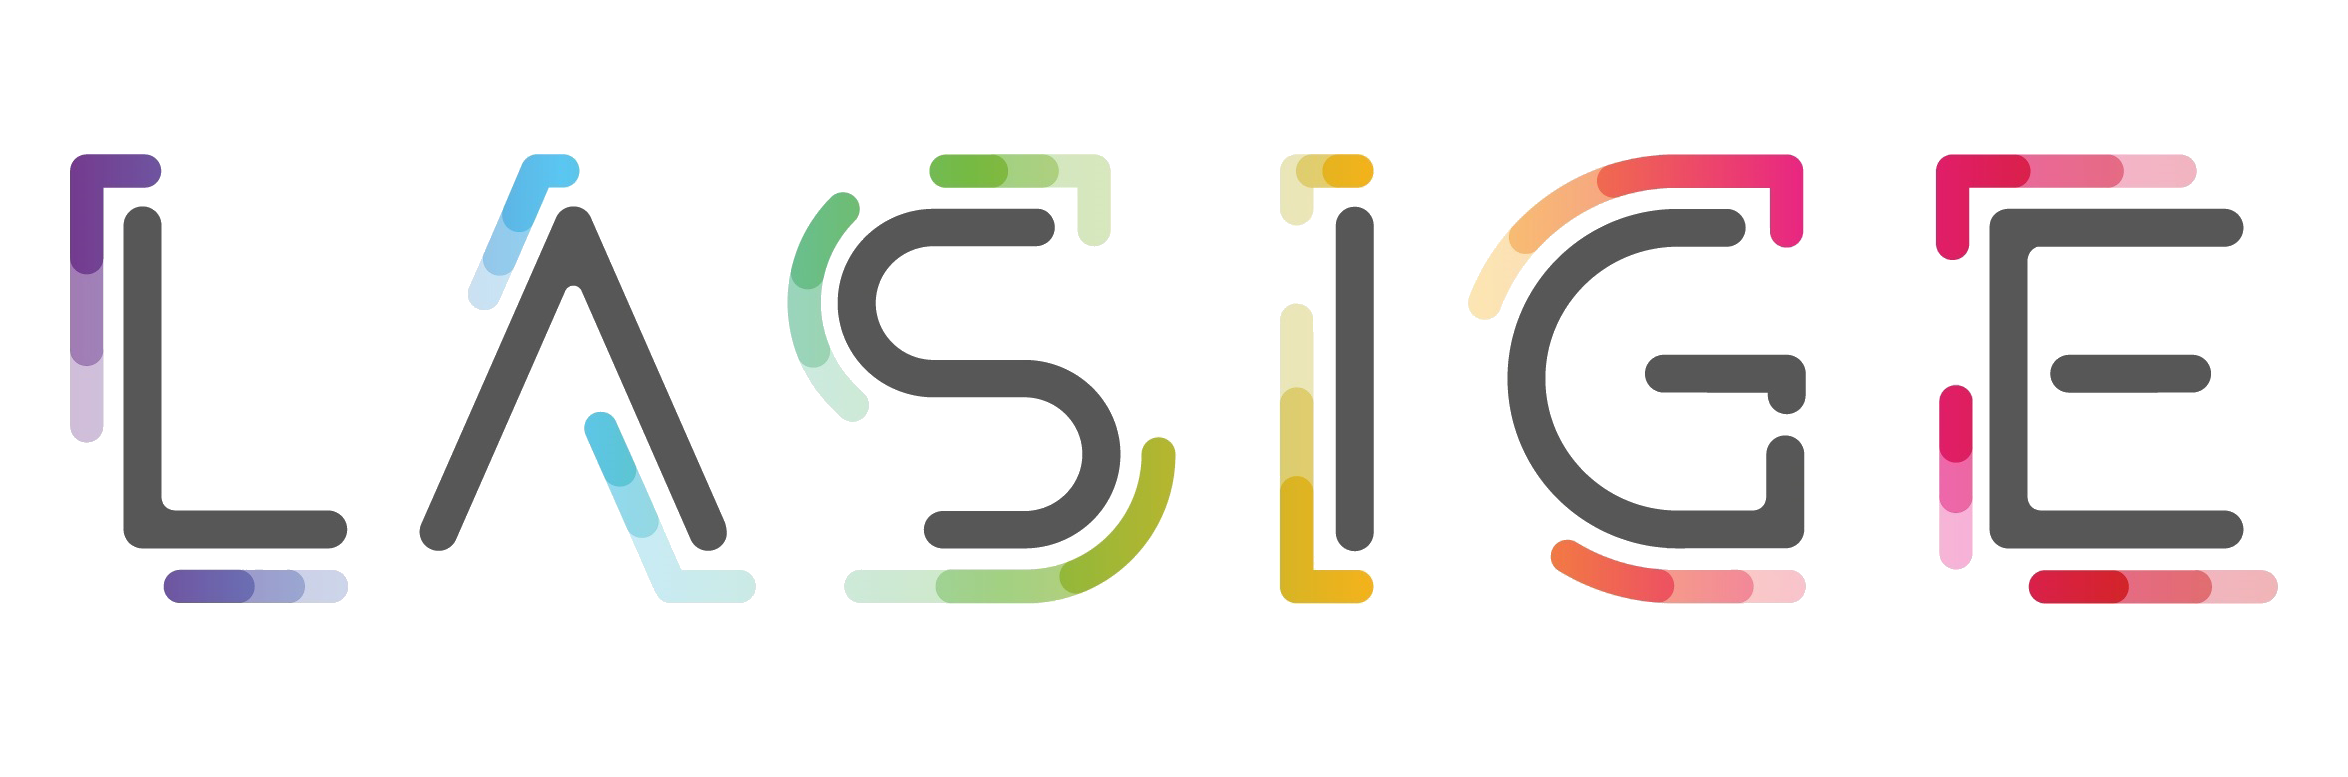 LASIGE logo